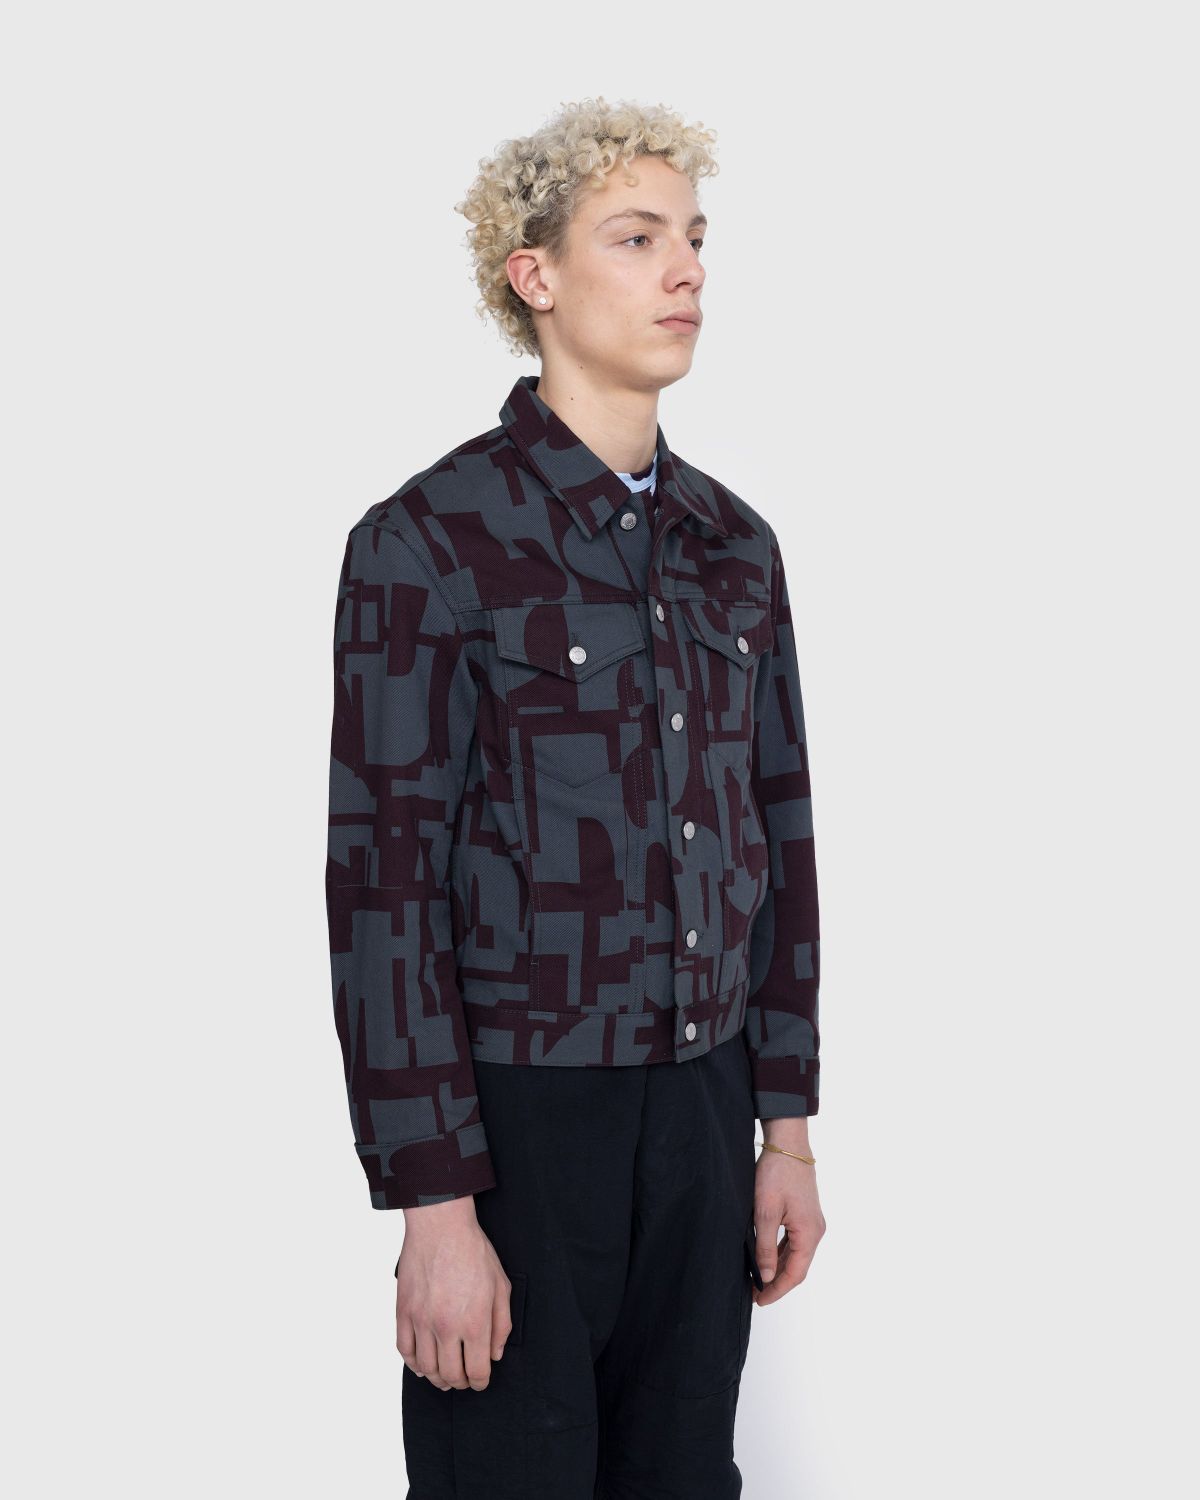 Dries van Noten – Vuskin Denim Jacket Multi - Outerwear - Black - Image 4